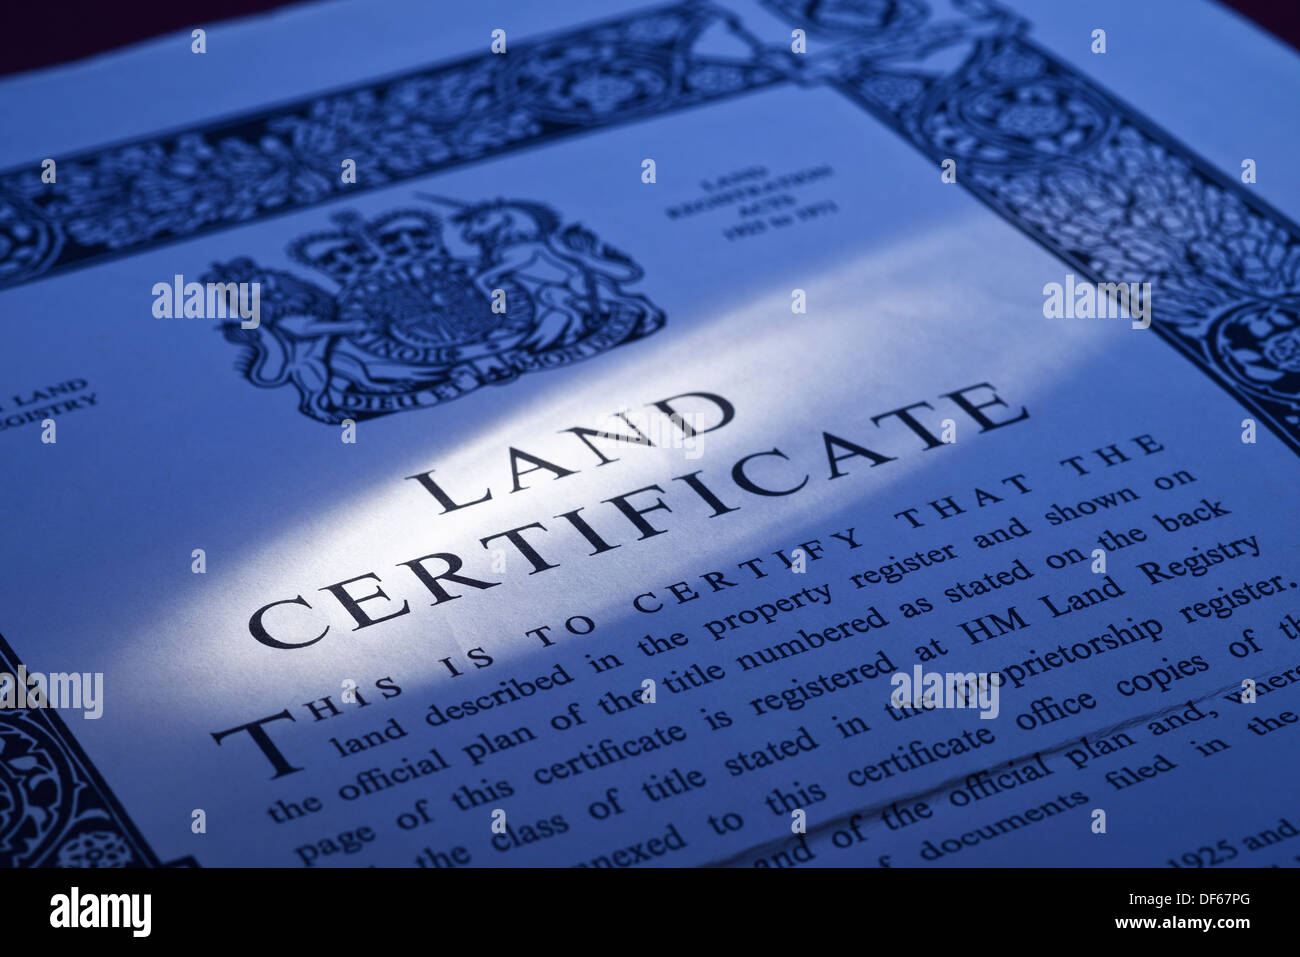 UK Land Registry Land Zertifikat Eigentumsdokument Stockfoto